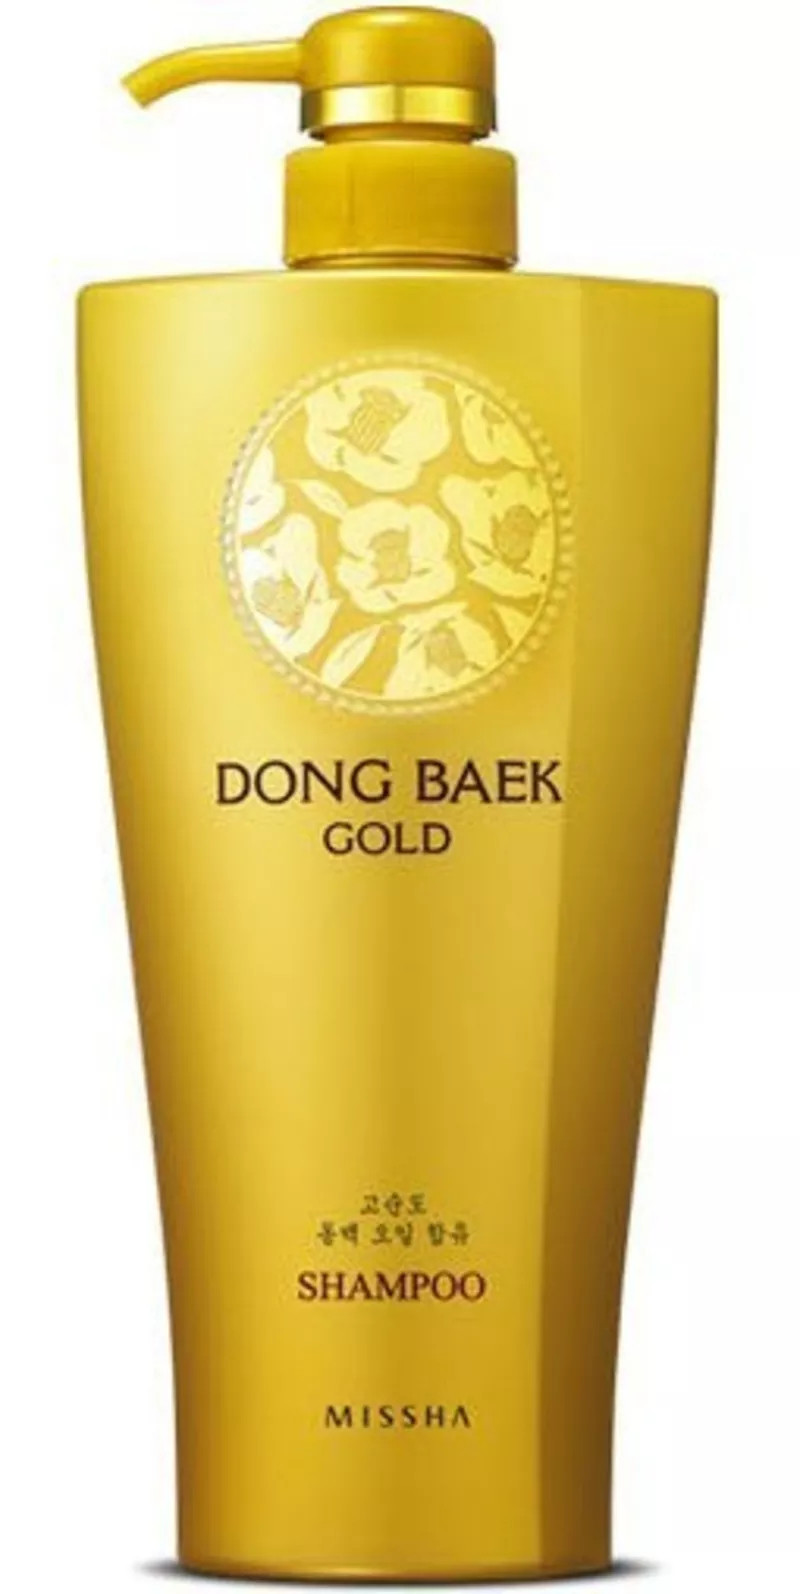  Missha DONG BAEK Gold Shampoo,  9 ml /  Шампунь для волос 2